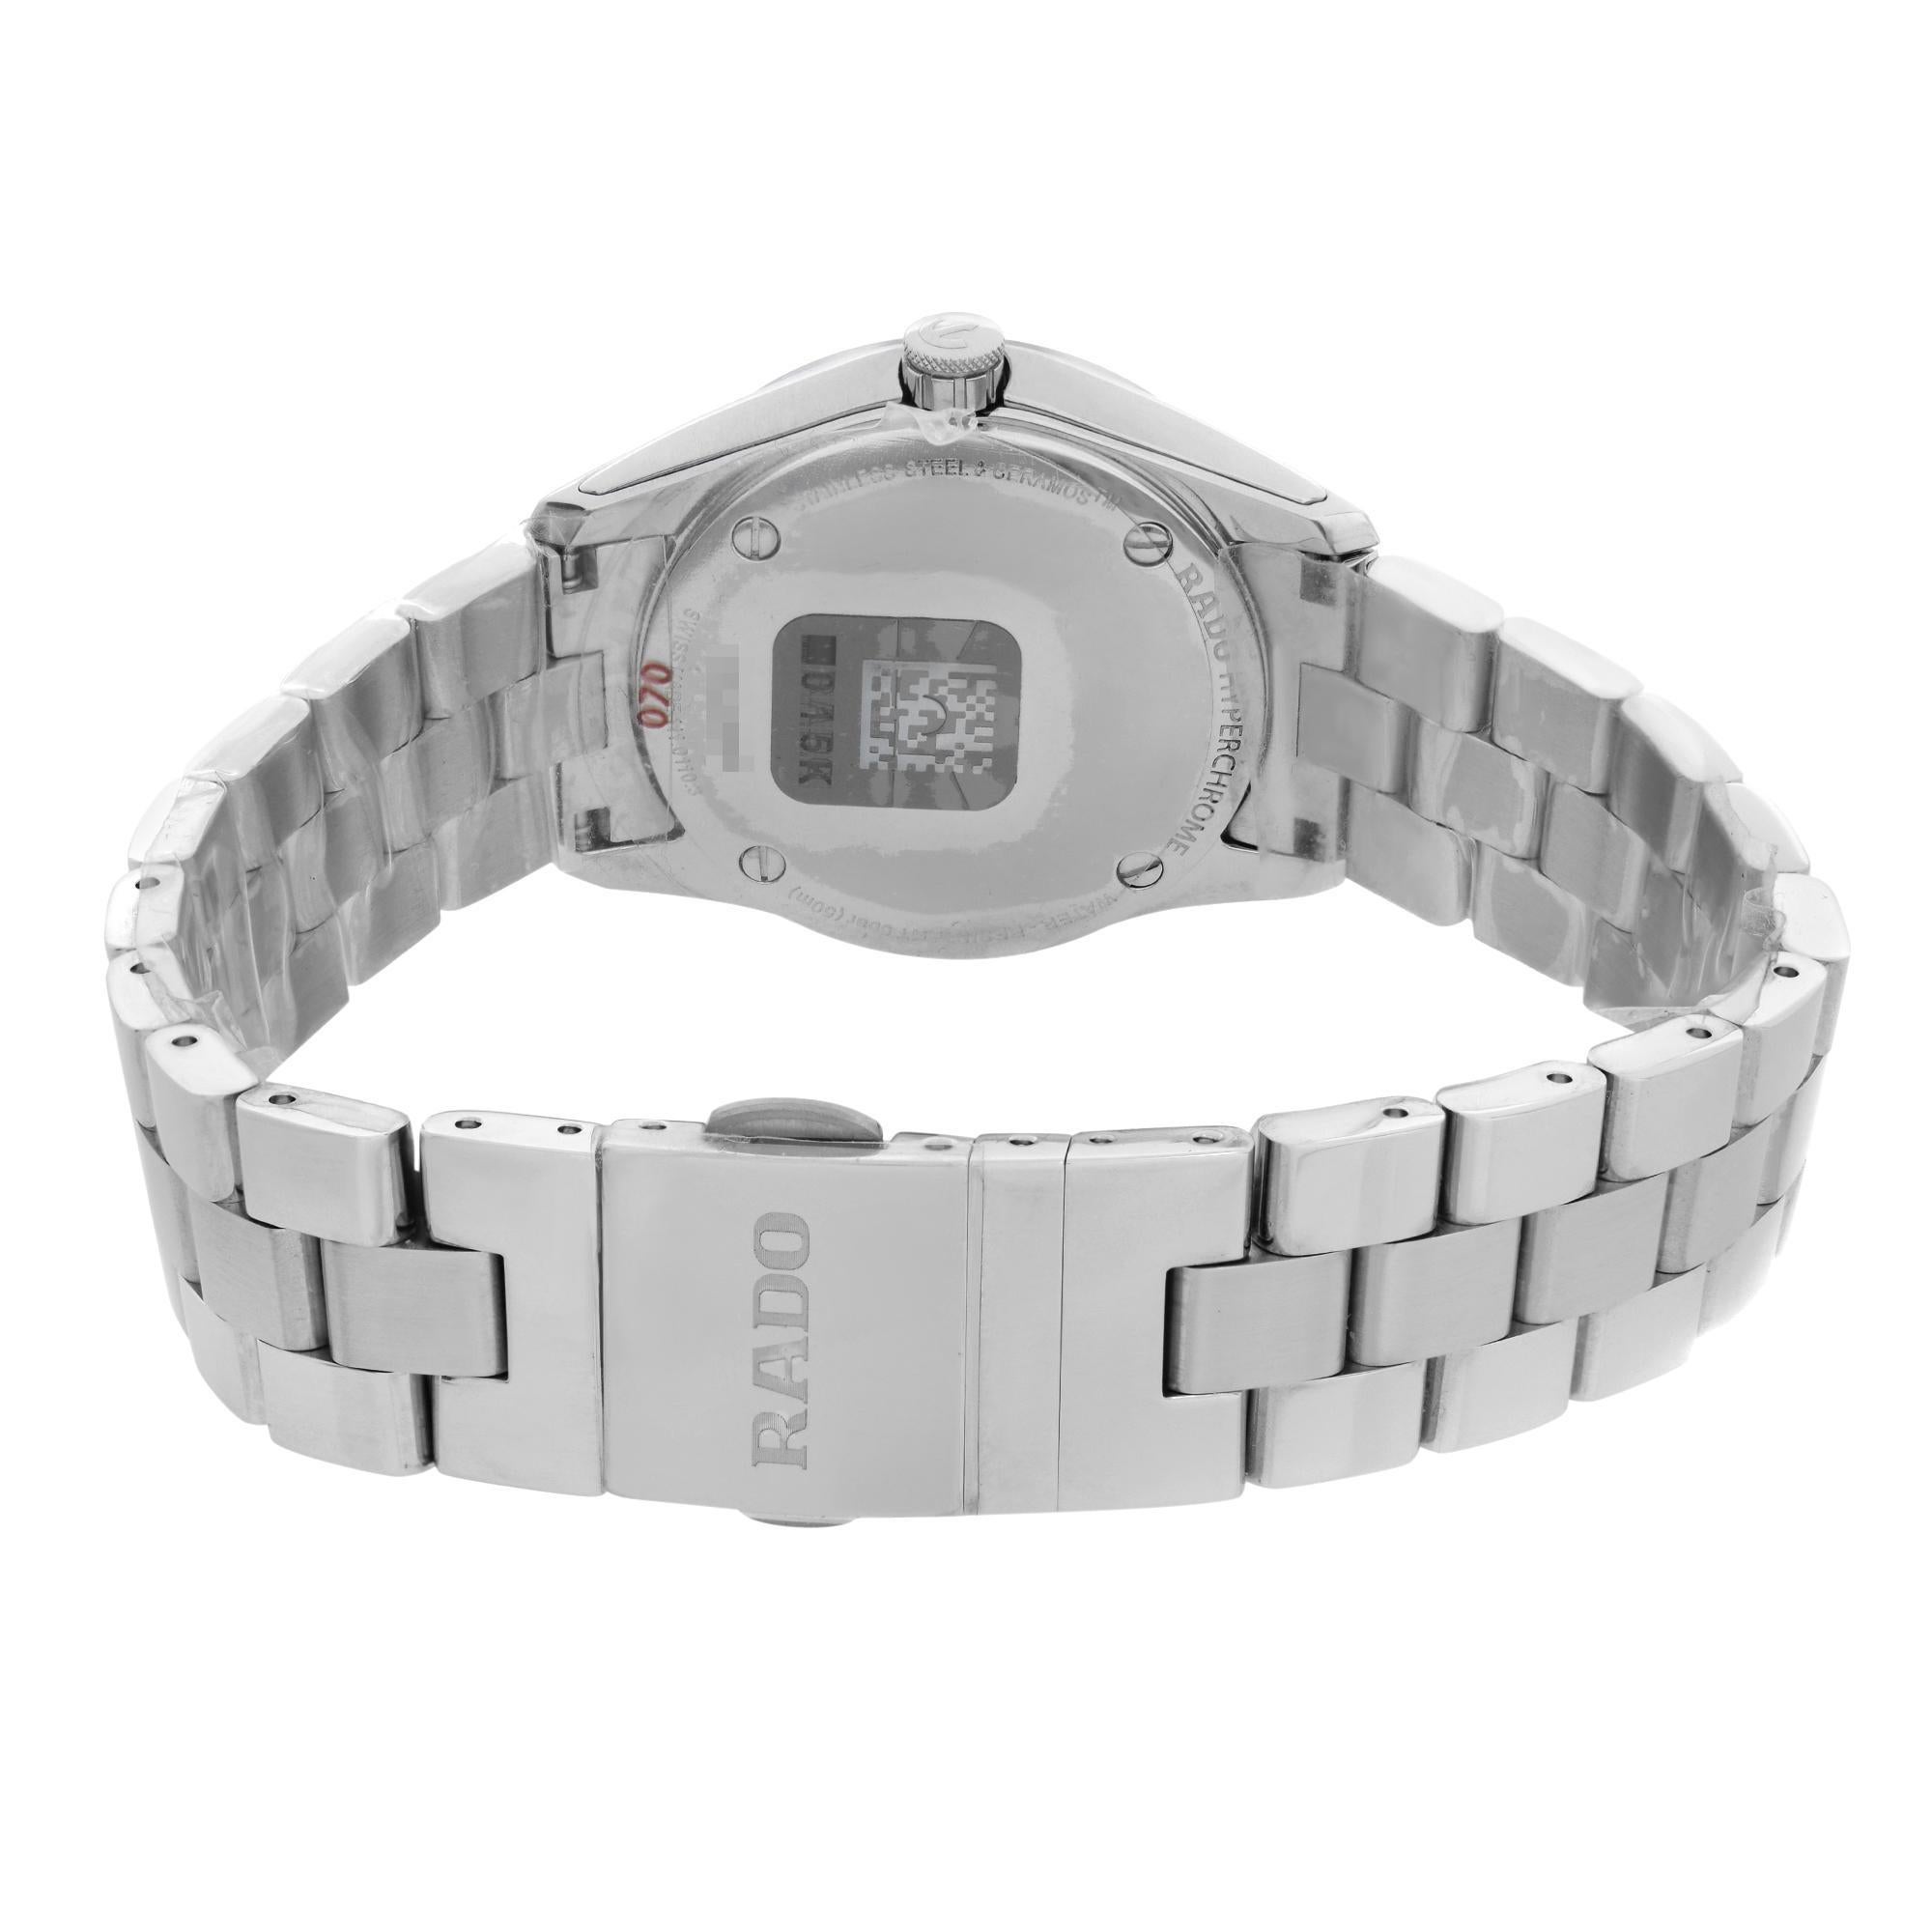 rado hyperchrome women's watch